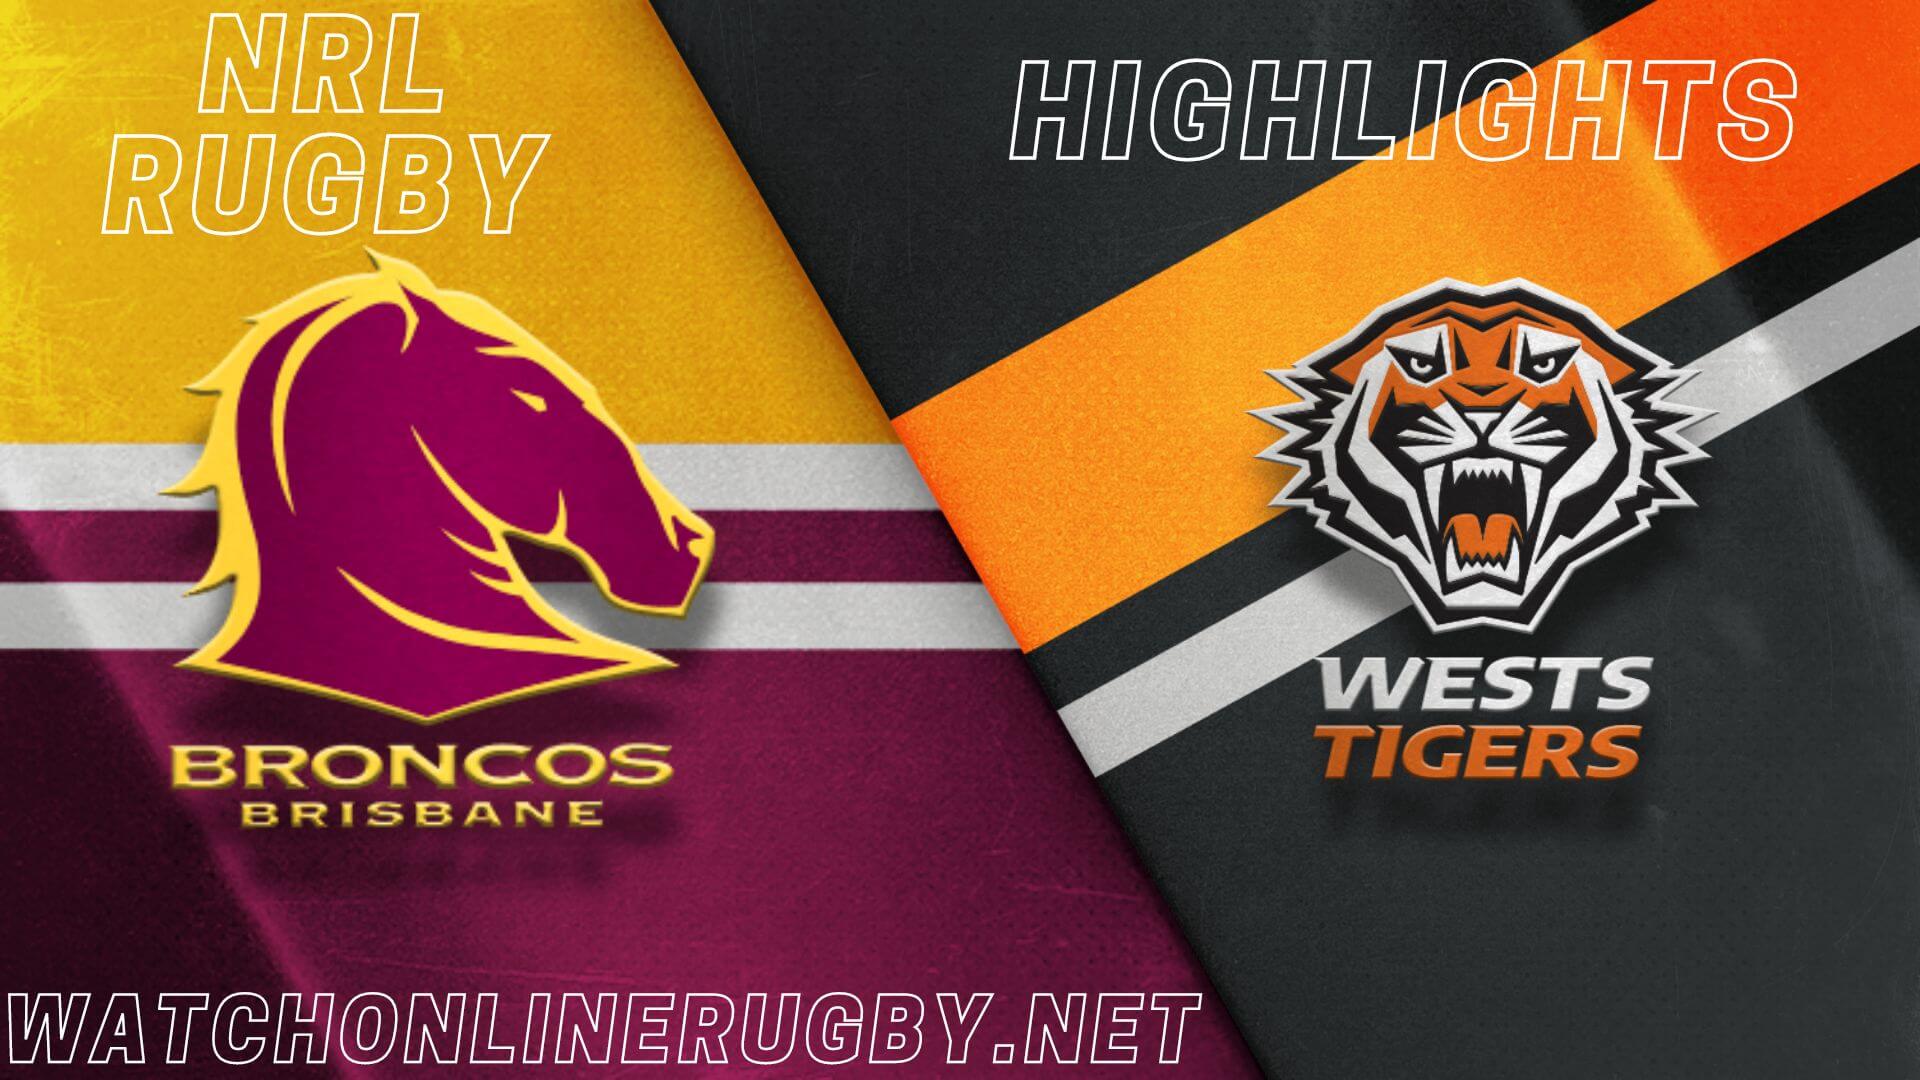 Broncos Vs Wests Tigers Highlights RD 20 NRL Rugby